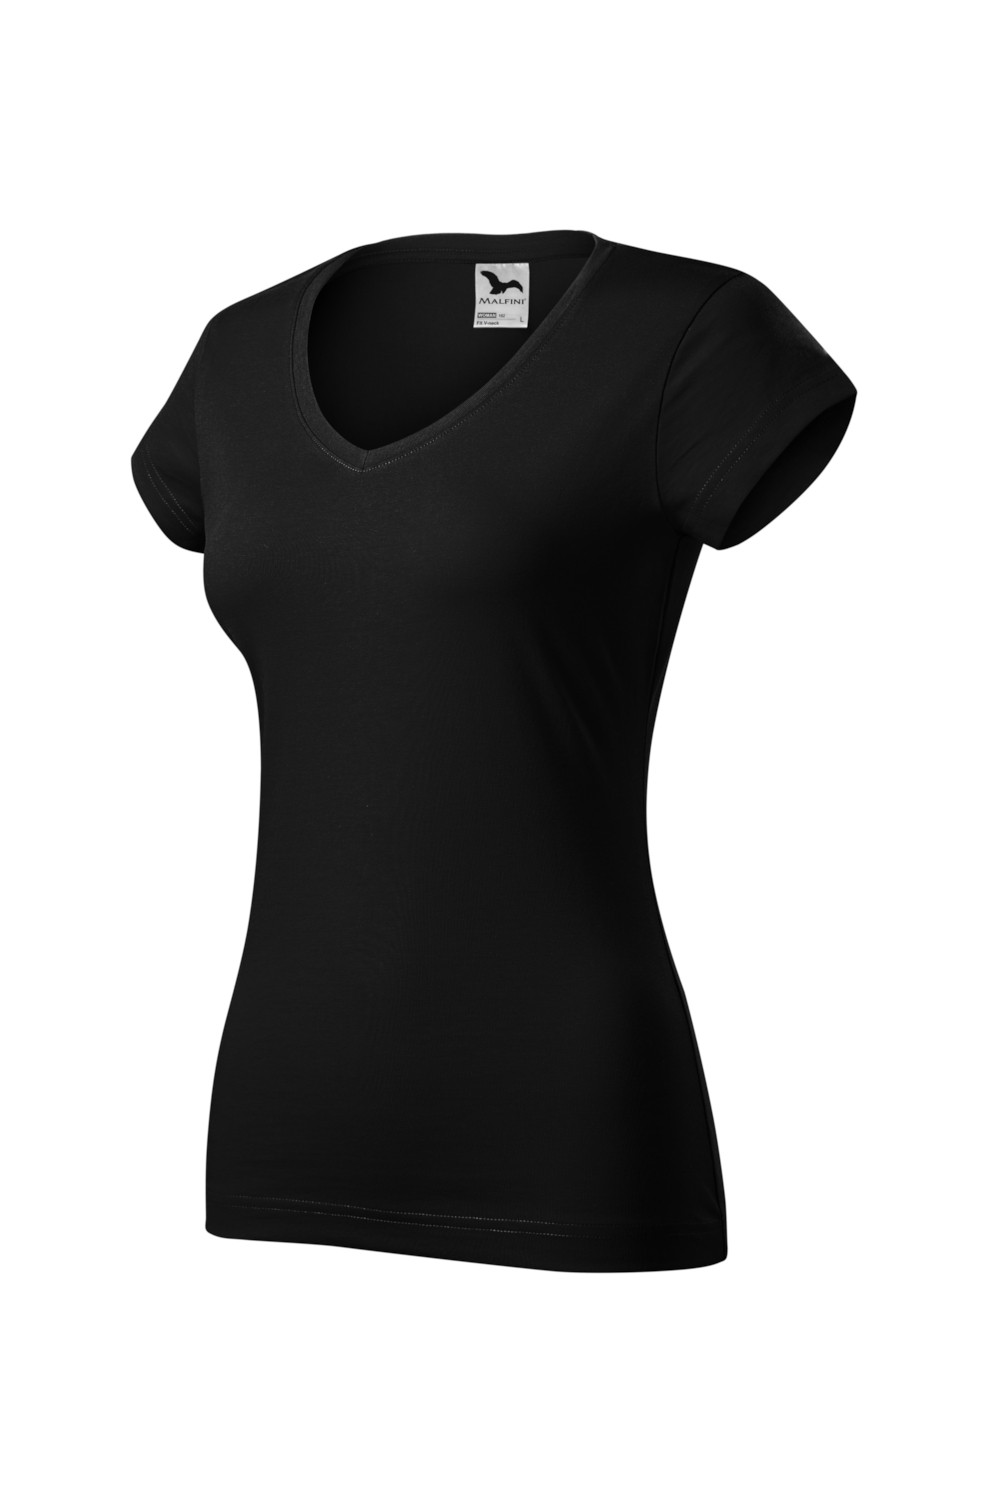 Koszulka damska 100% bawełna V-NECK 162 czarny